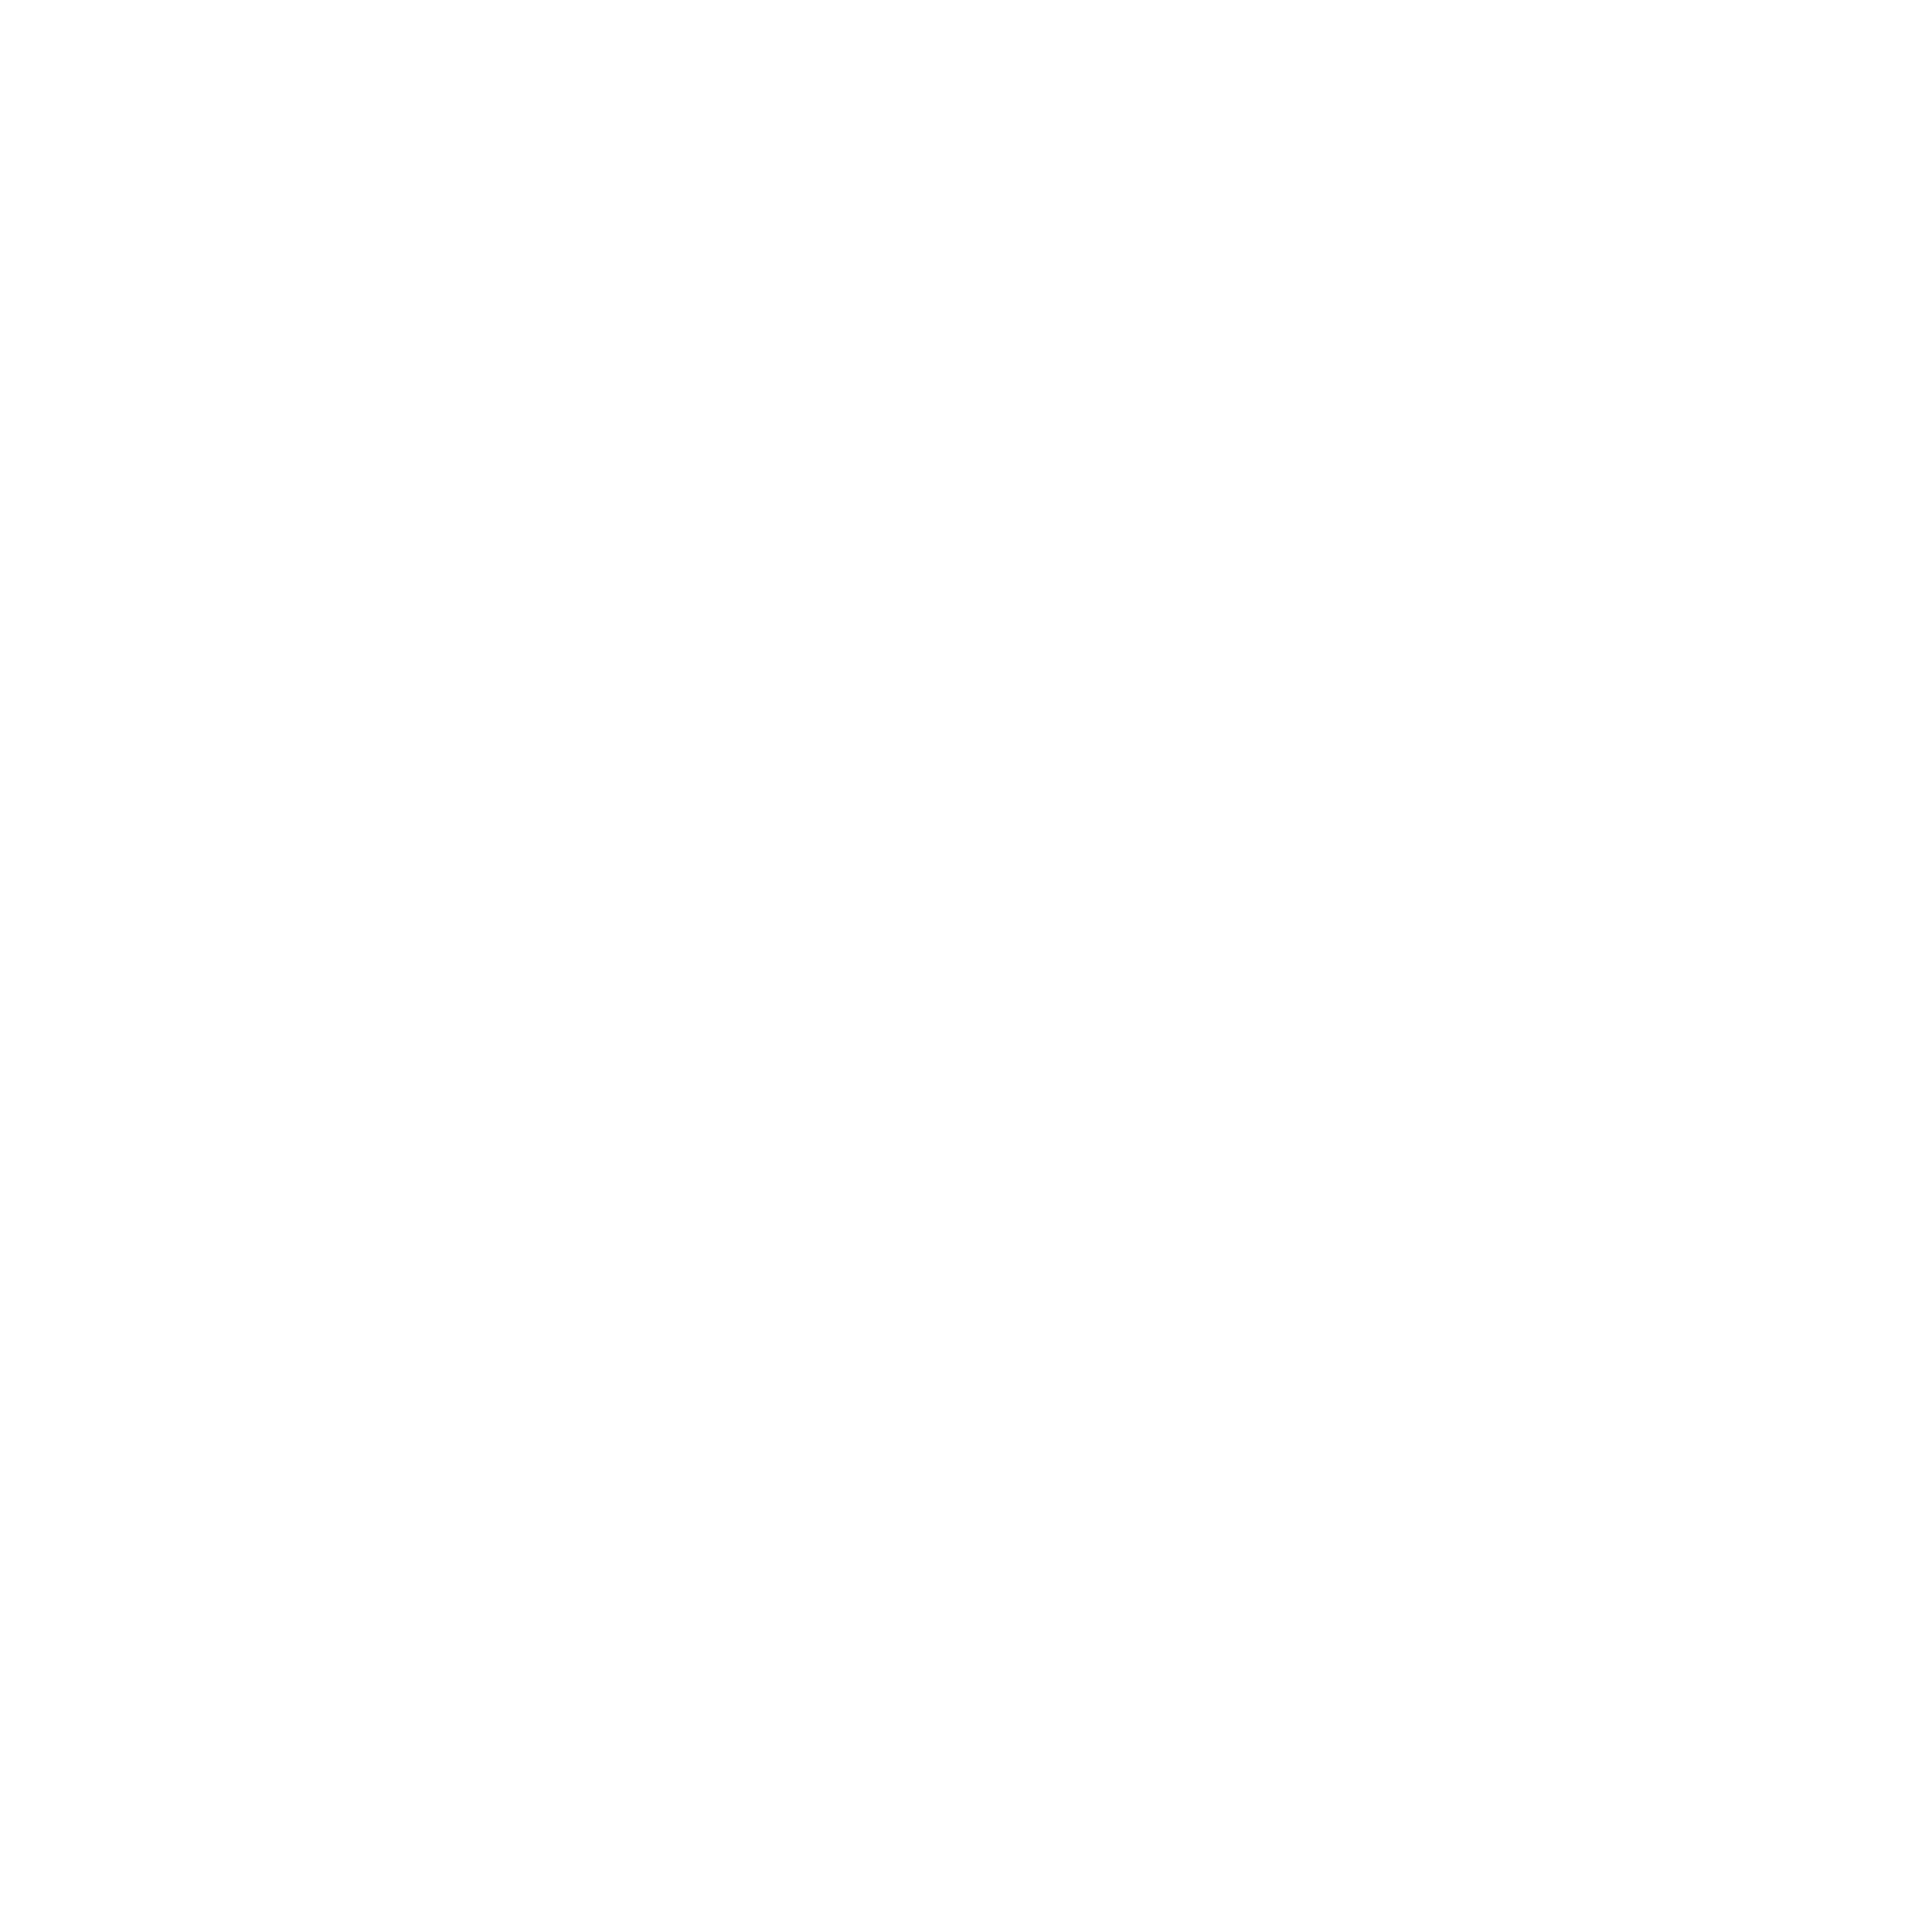 ProSieben_logo white.png